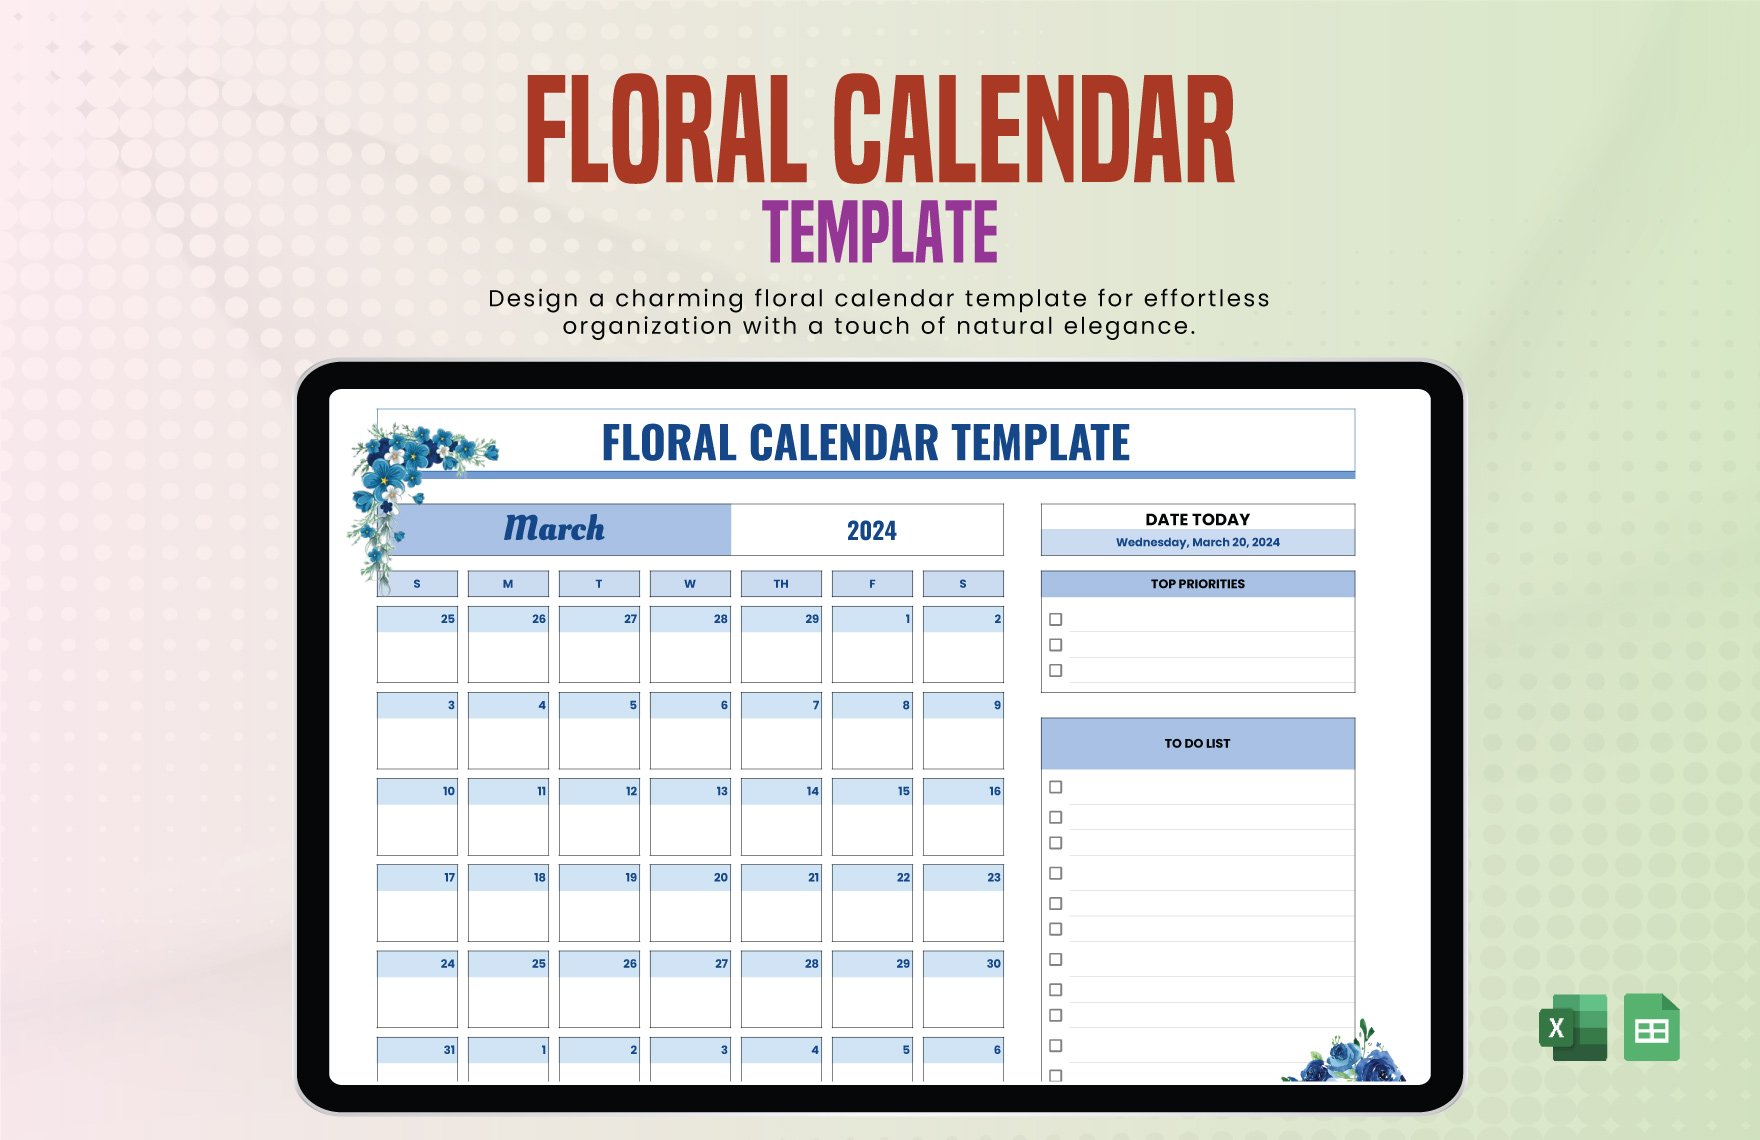 Floral Calendar Template in Excel, Google Sheets